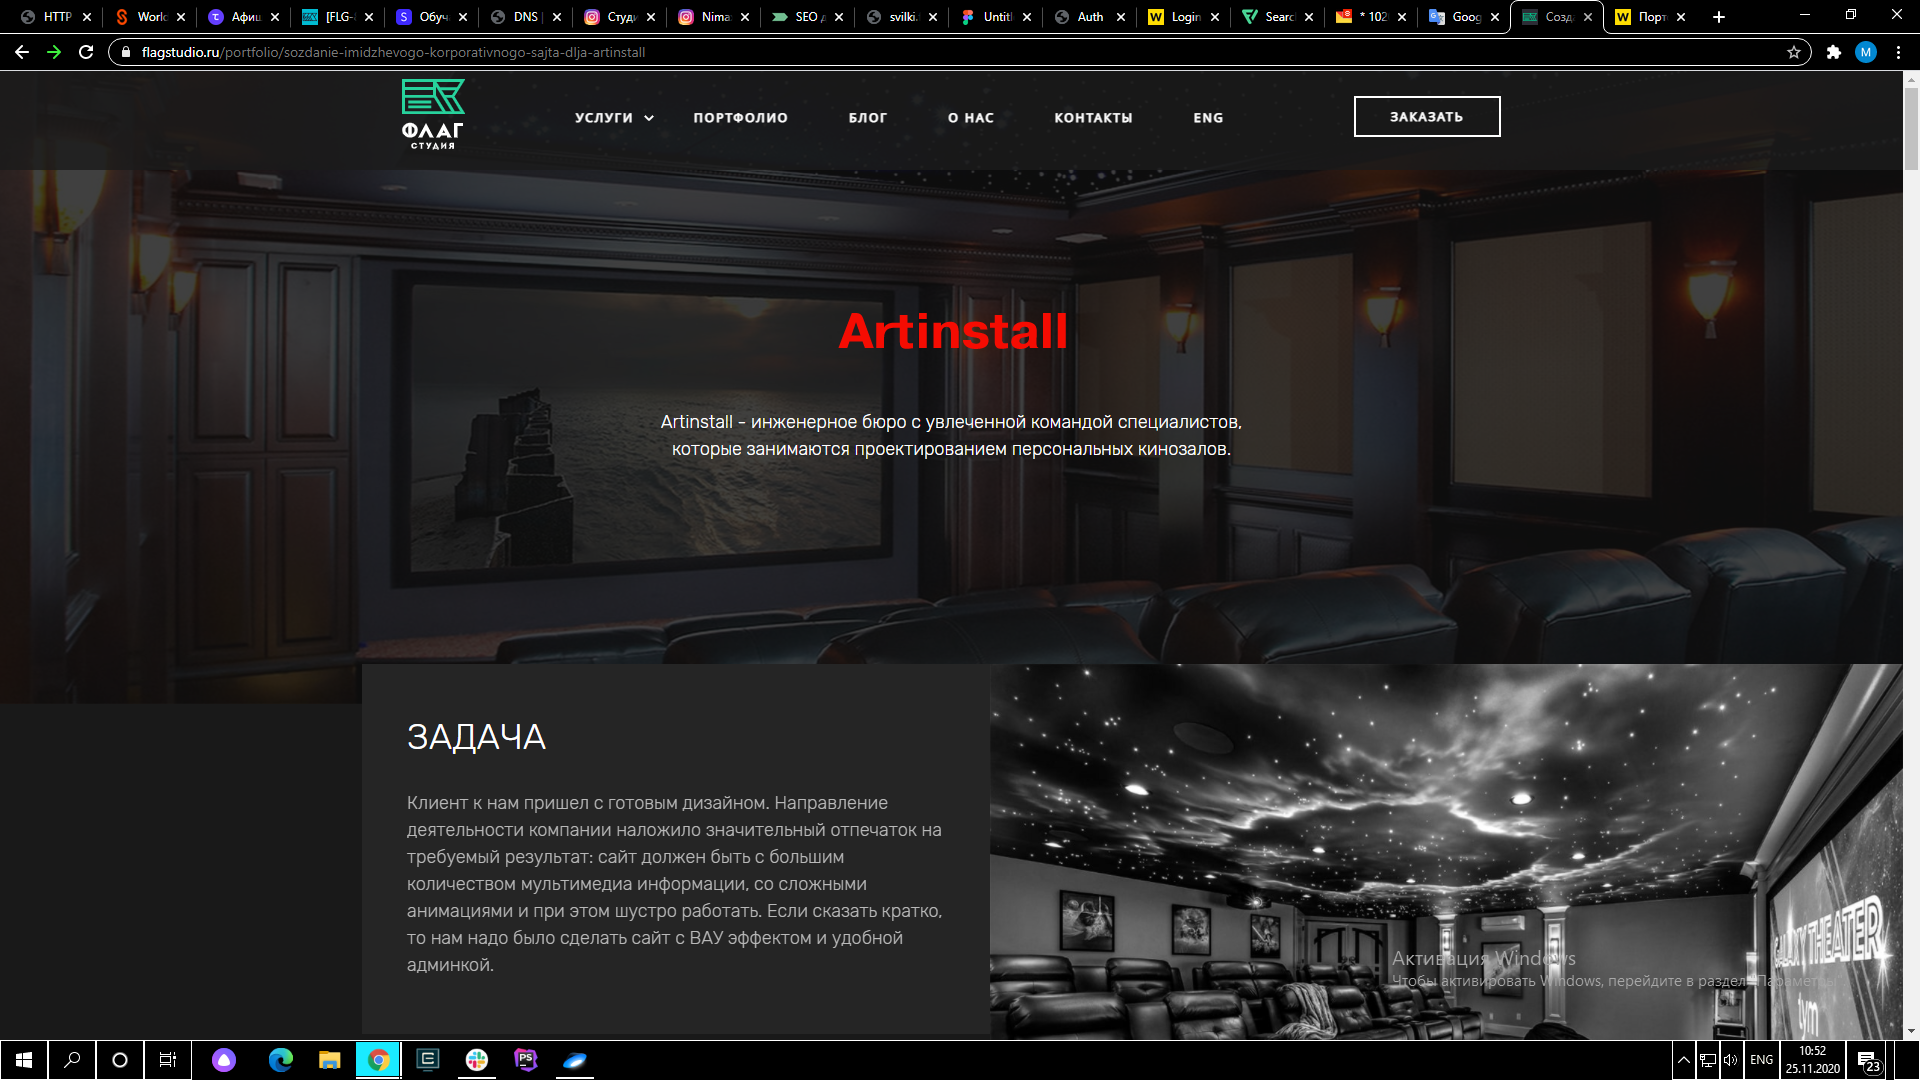 Artinstall - a site for an engineering bureau that designs personal cinemas